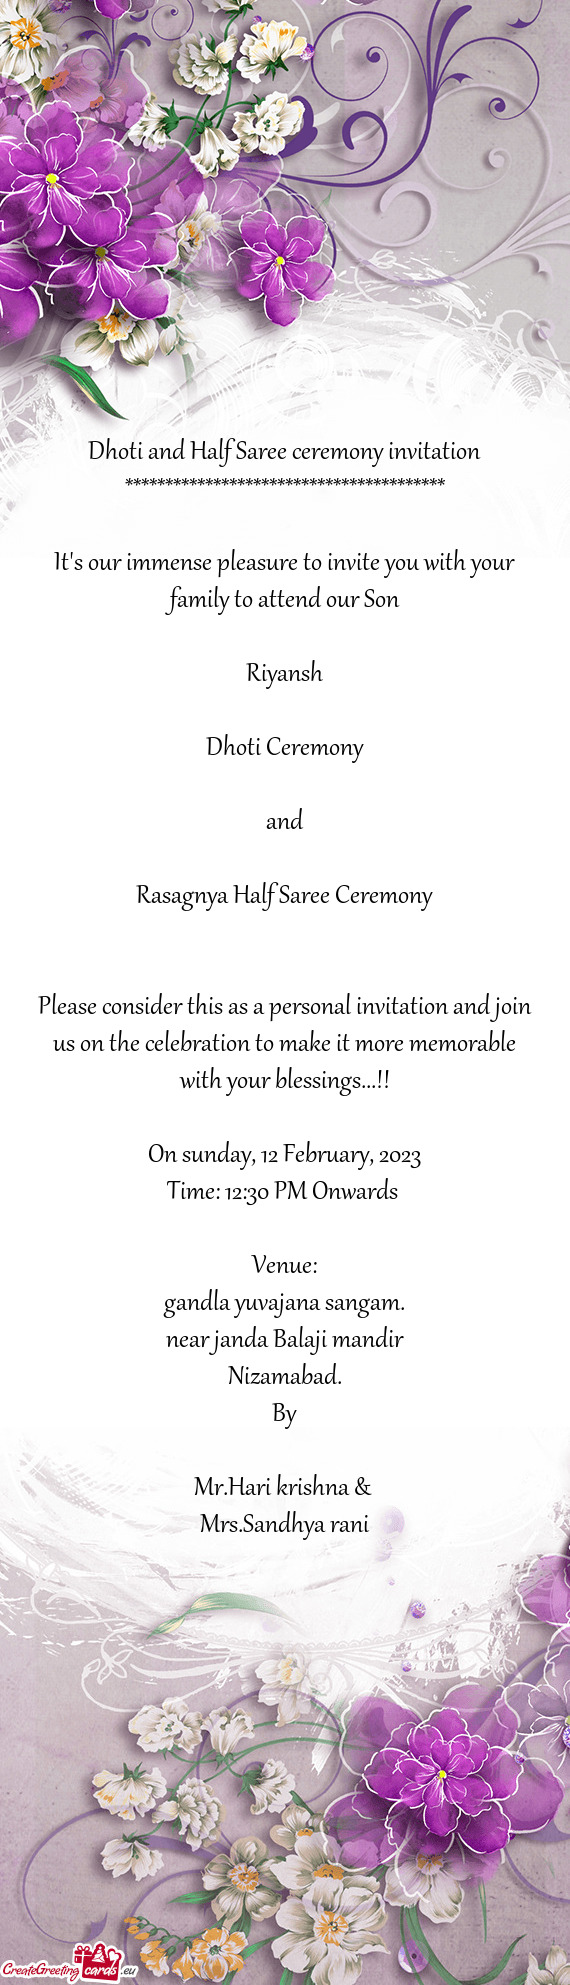 Rasagnya Half Saree Ceremony